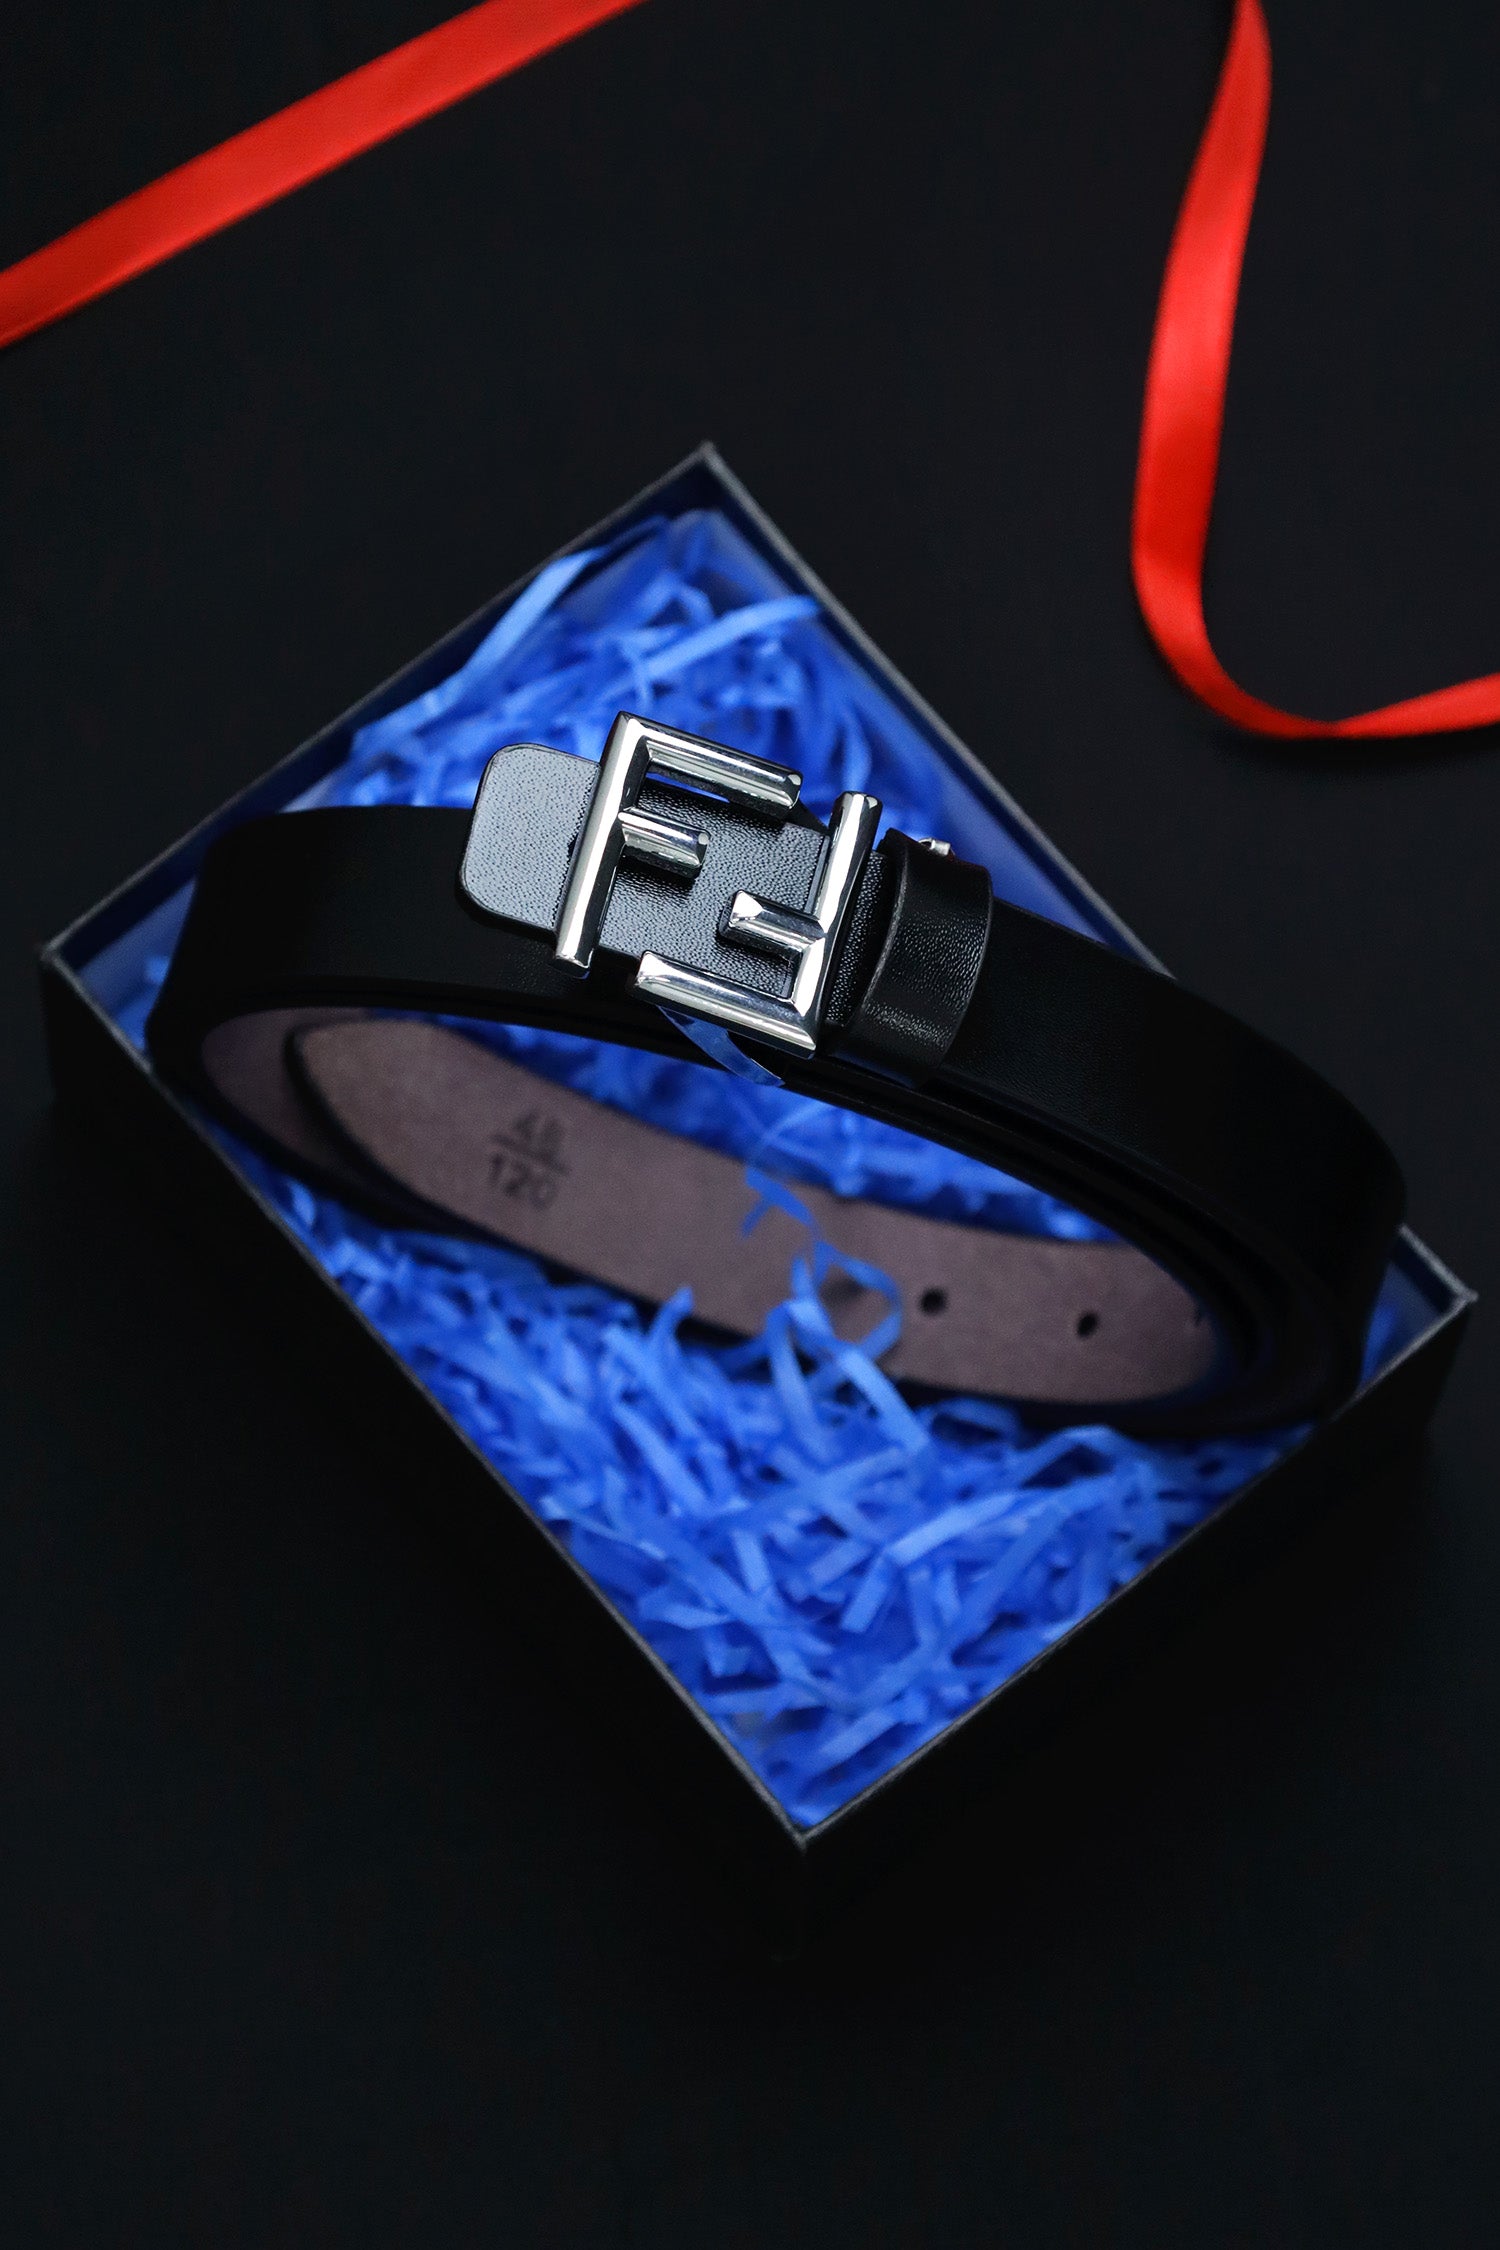 Fndi Metal Alloy Automatic Buckle Branded Belt